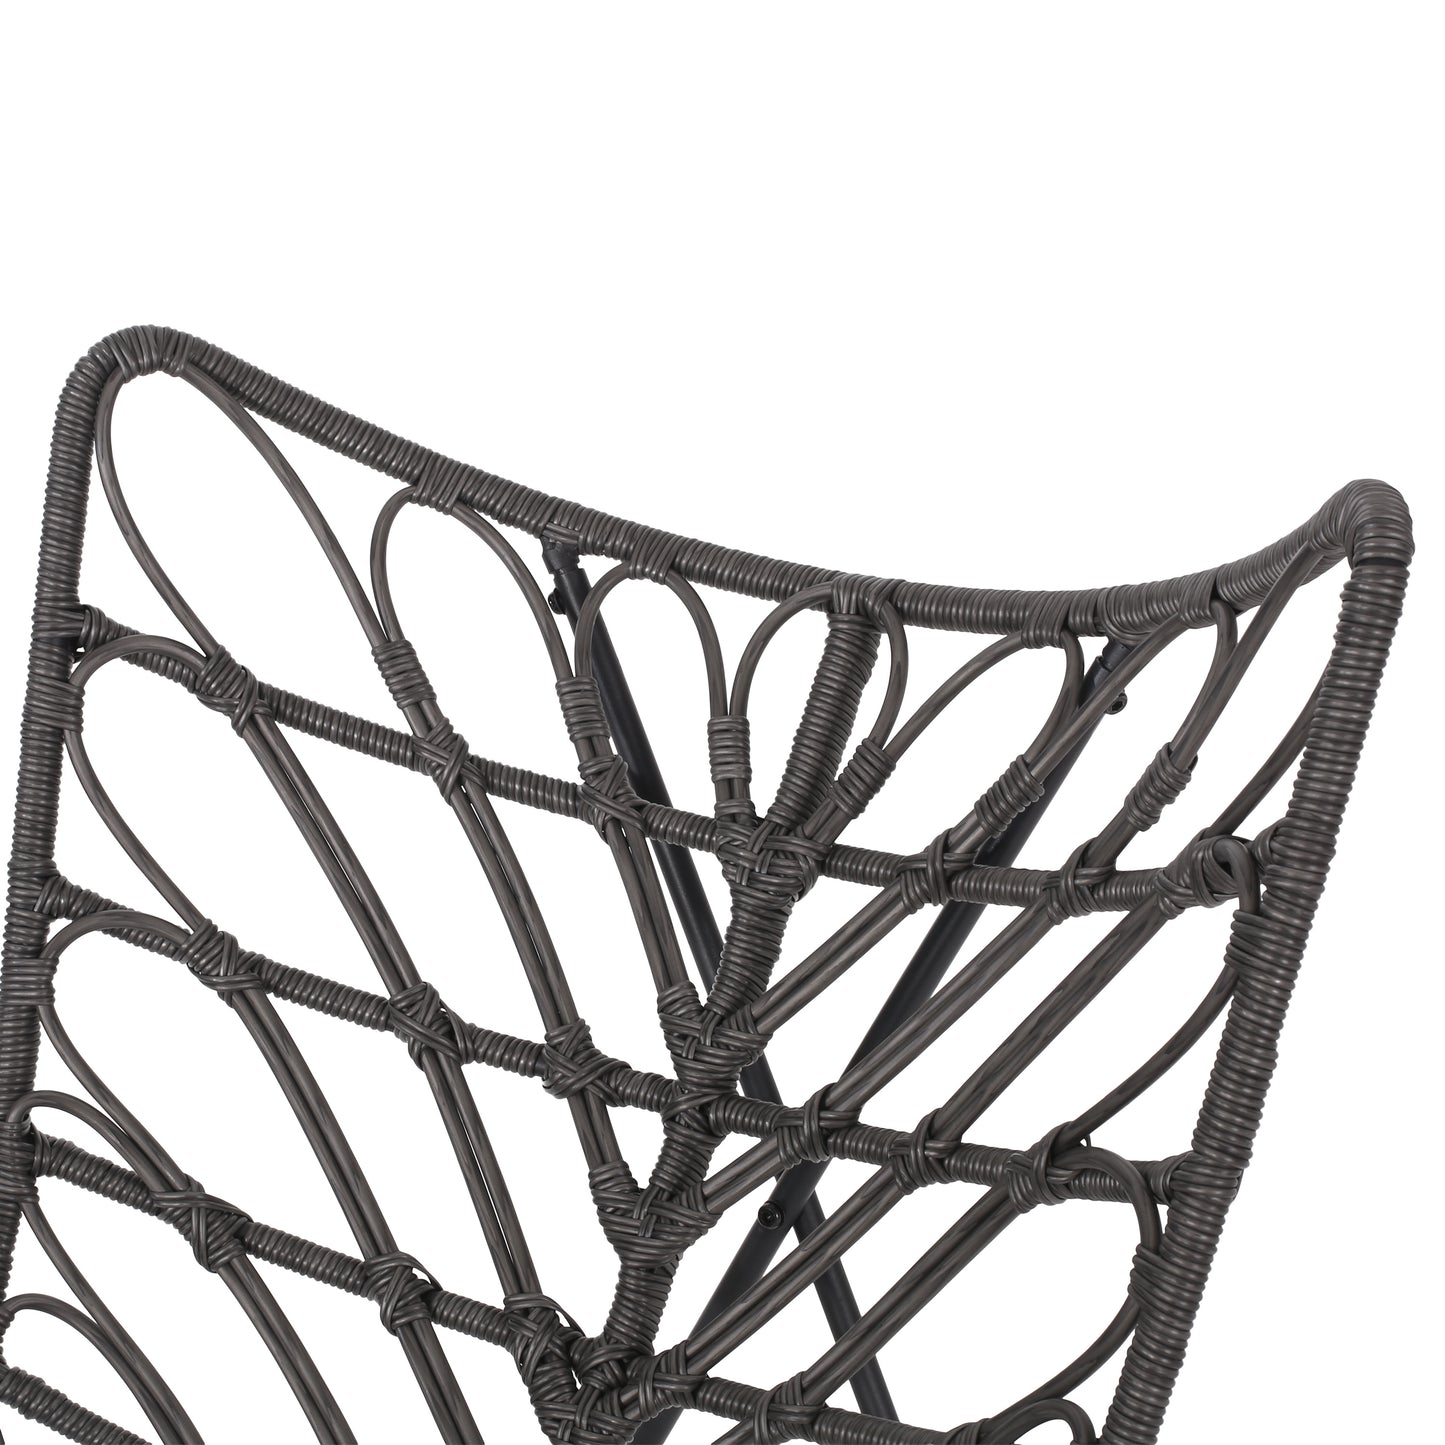 Danbury Outdoor Boho Modern Wicker Accent Chairs, Set of 2